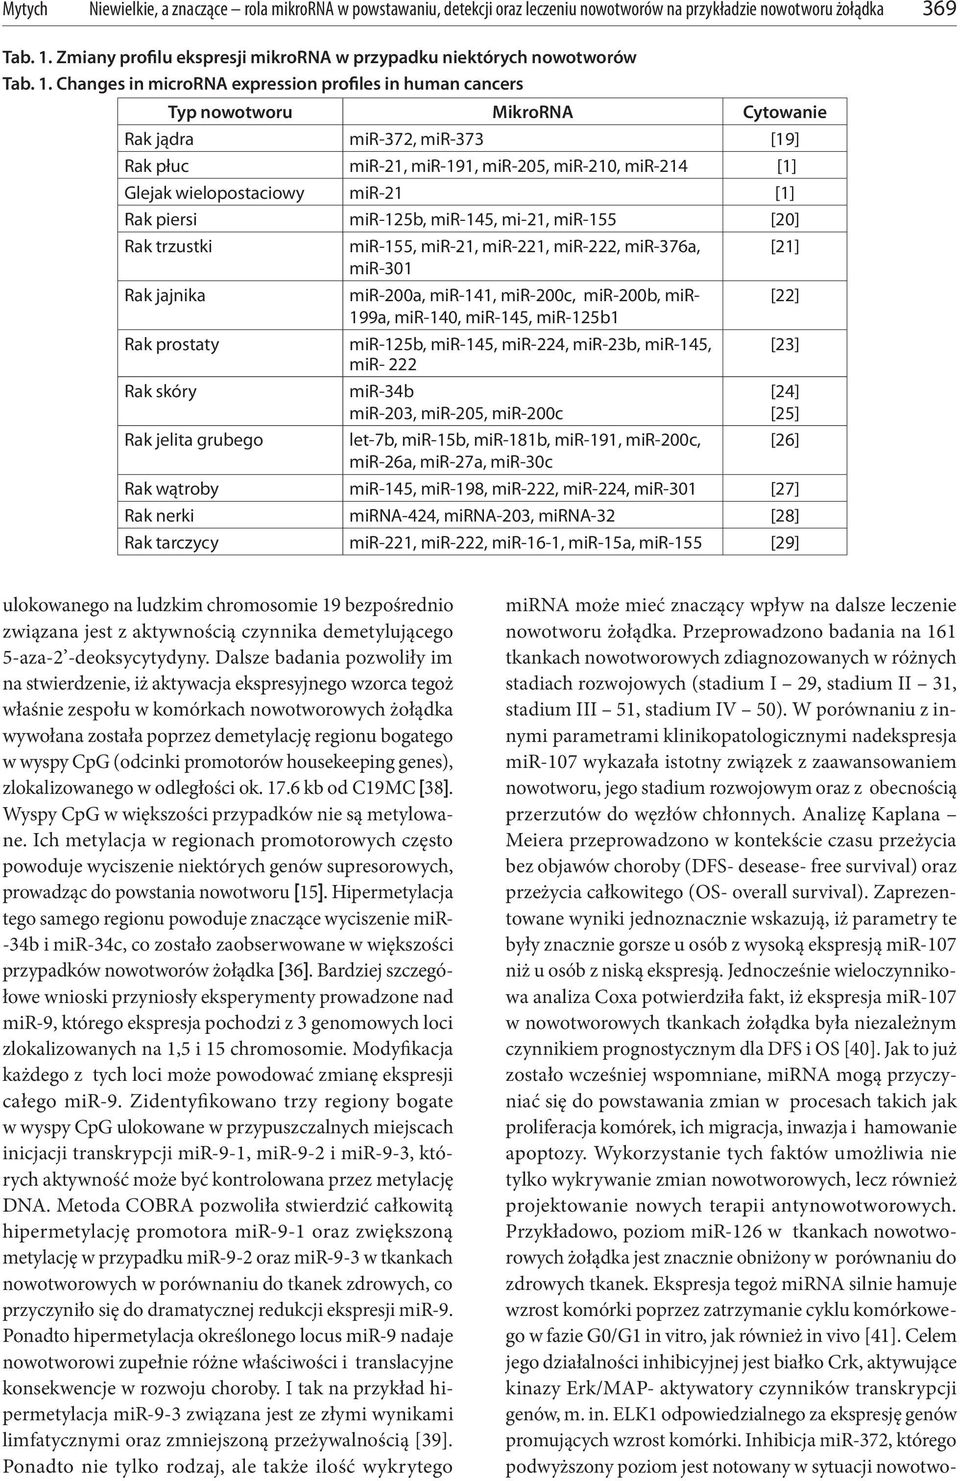 Changes in microrna expression profiles in human cancers Typ nowotworu MikroRNA Cytowanie Rak jądra mir-372, mir-373 [19] Rak płuc mir-21, mir-191, mir-205, mir-210, mir-214 [1] Glejak